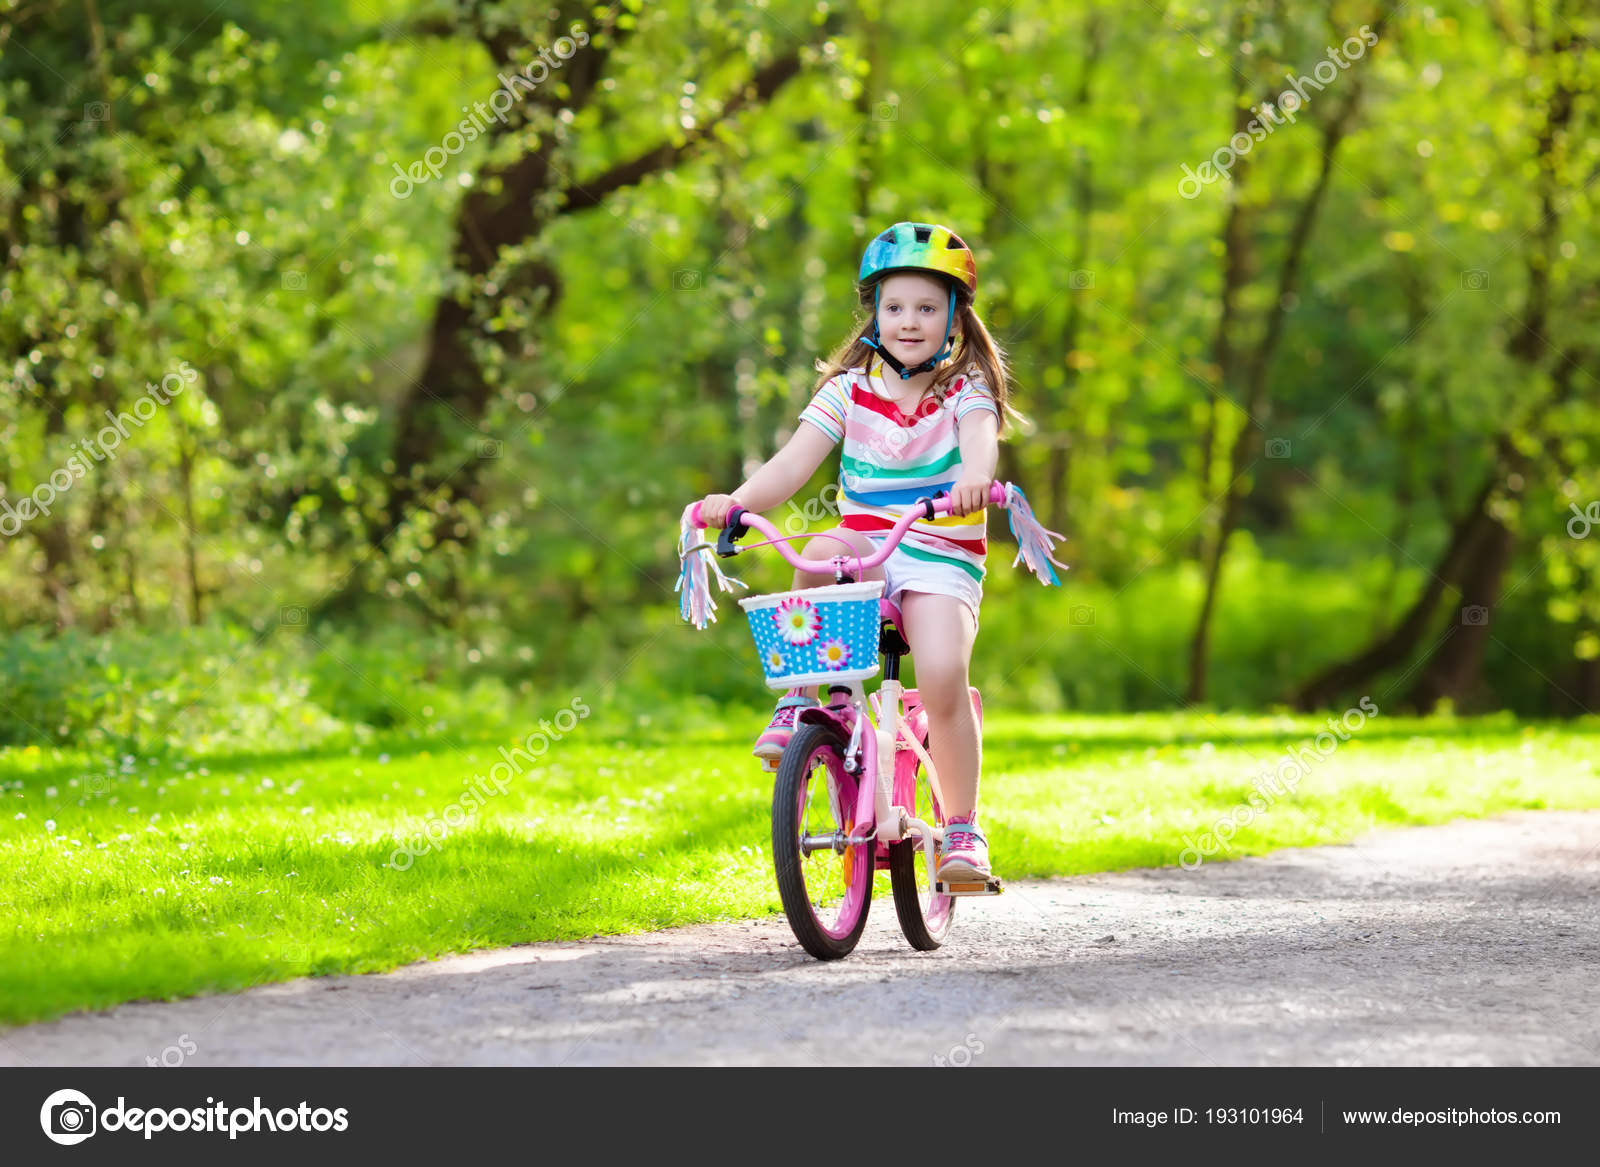 little kids riding bikes